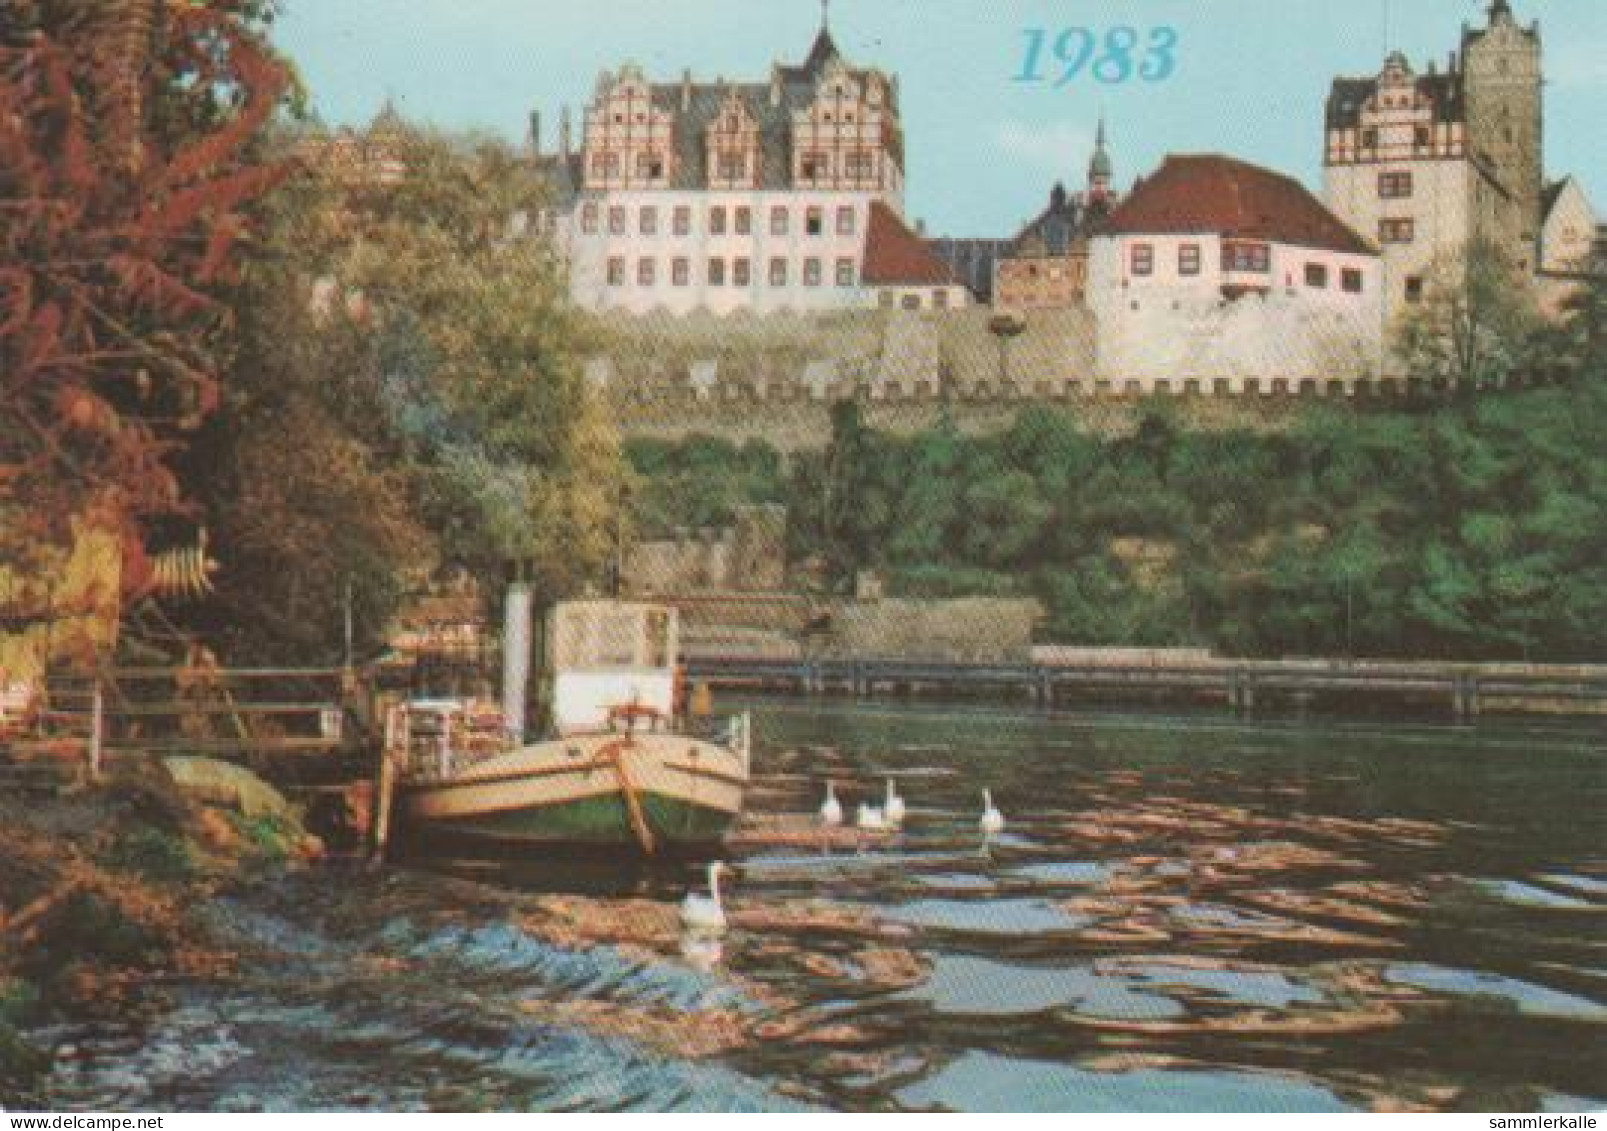 2991 - Bernburg - Schloss (Rückseite Mit Text Zu Bernburg Bedruckt) - 1983 - Bernburg (Saale)